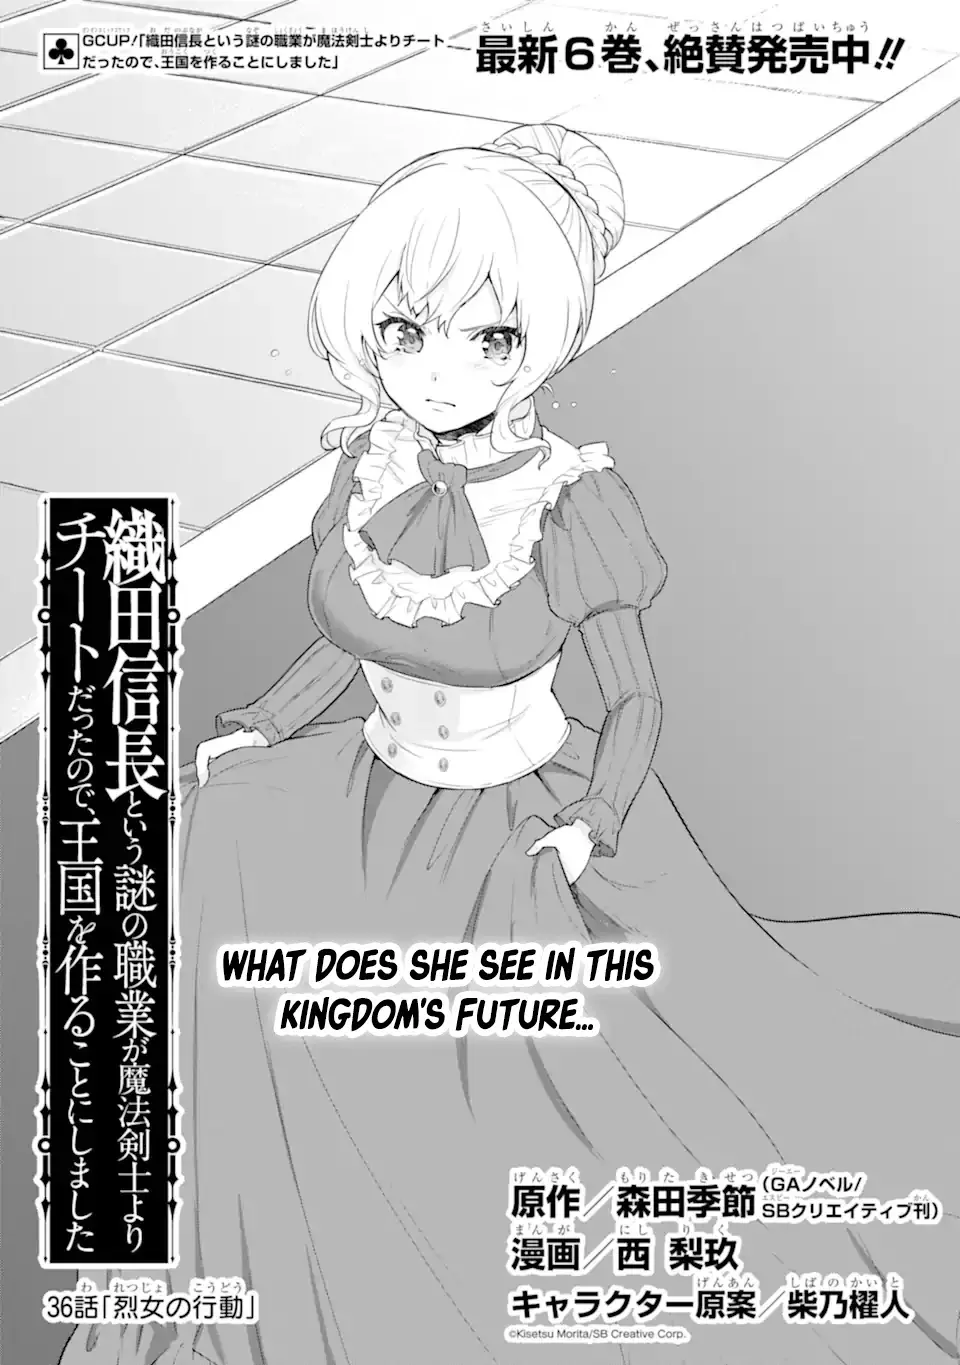 Mysterious Job Called Oda Nobunaga - 36 page 4-7fc0c524